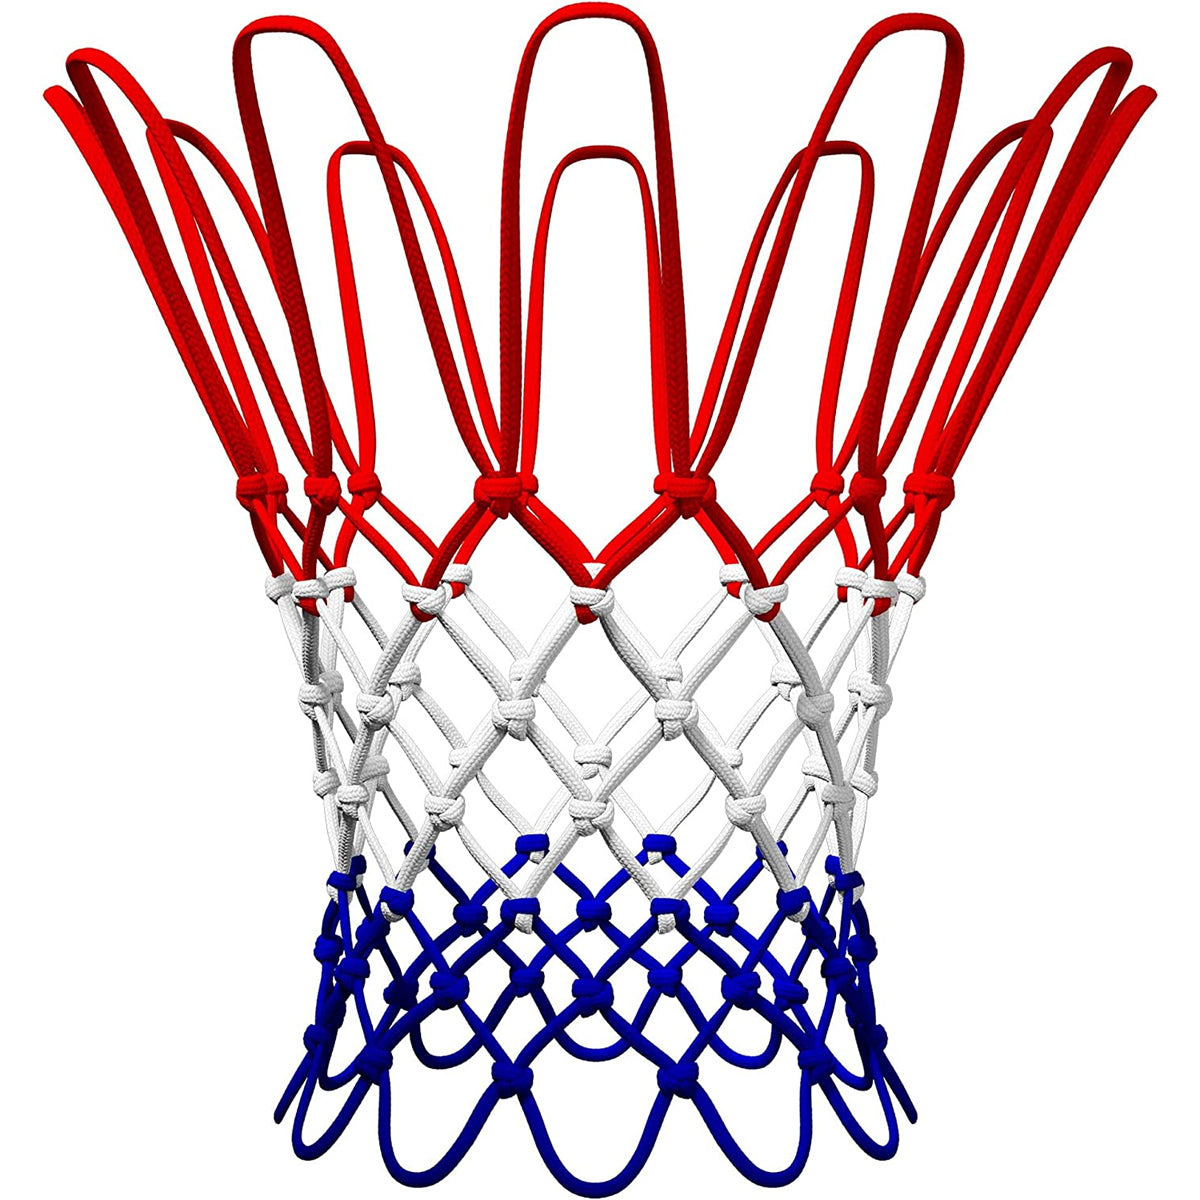 Spalding Heavy-Duty Basketball Net - Red/White/Blue Spalding